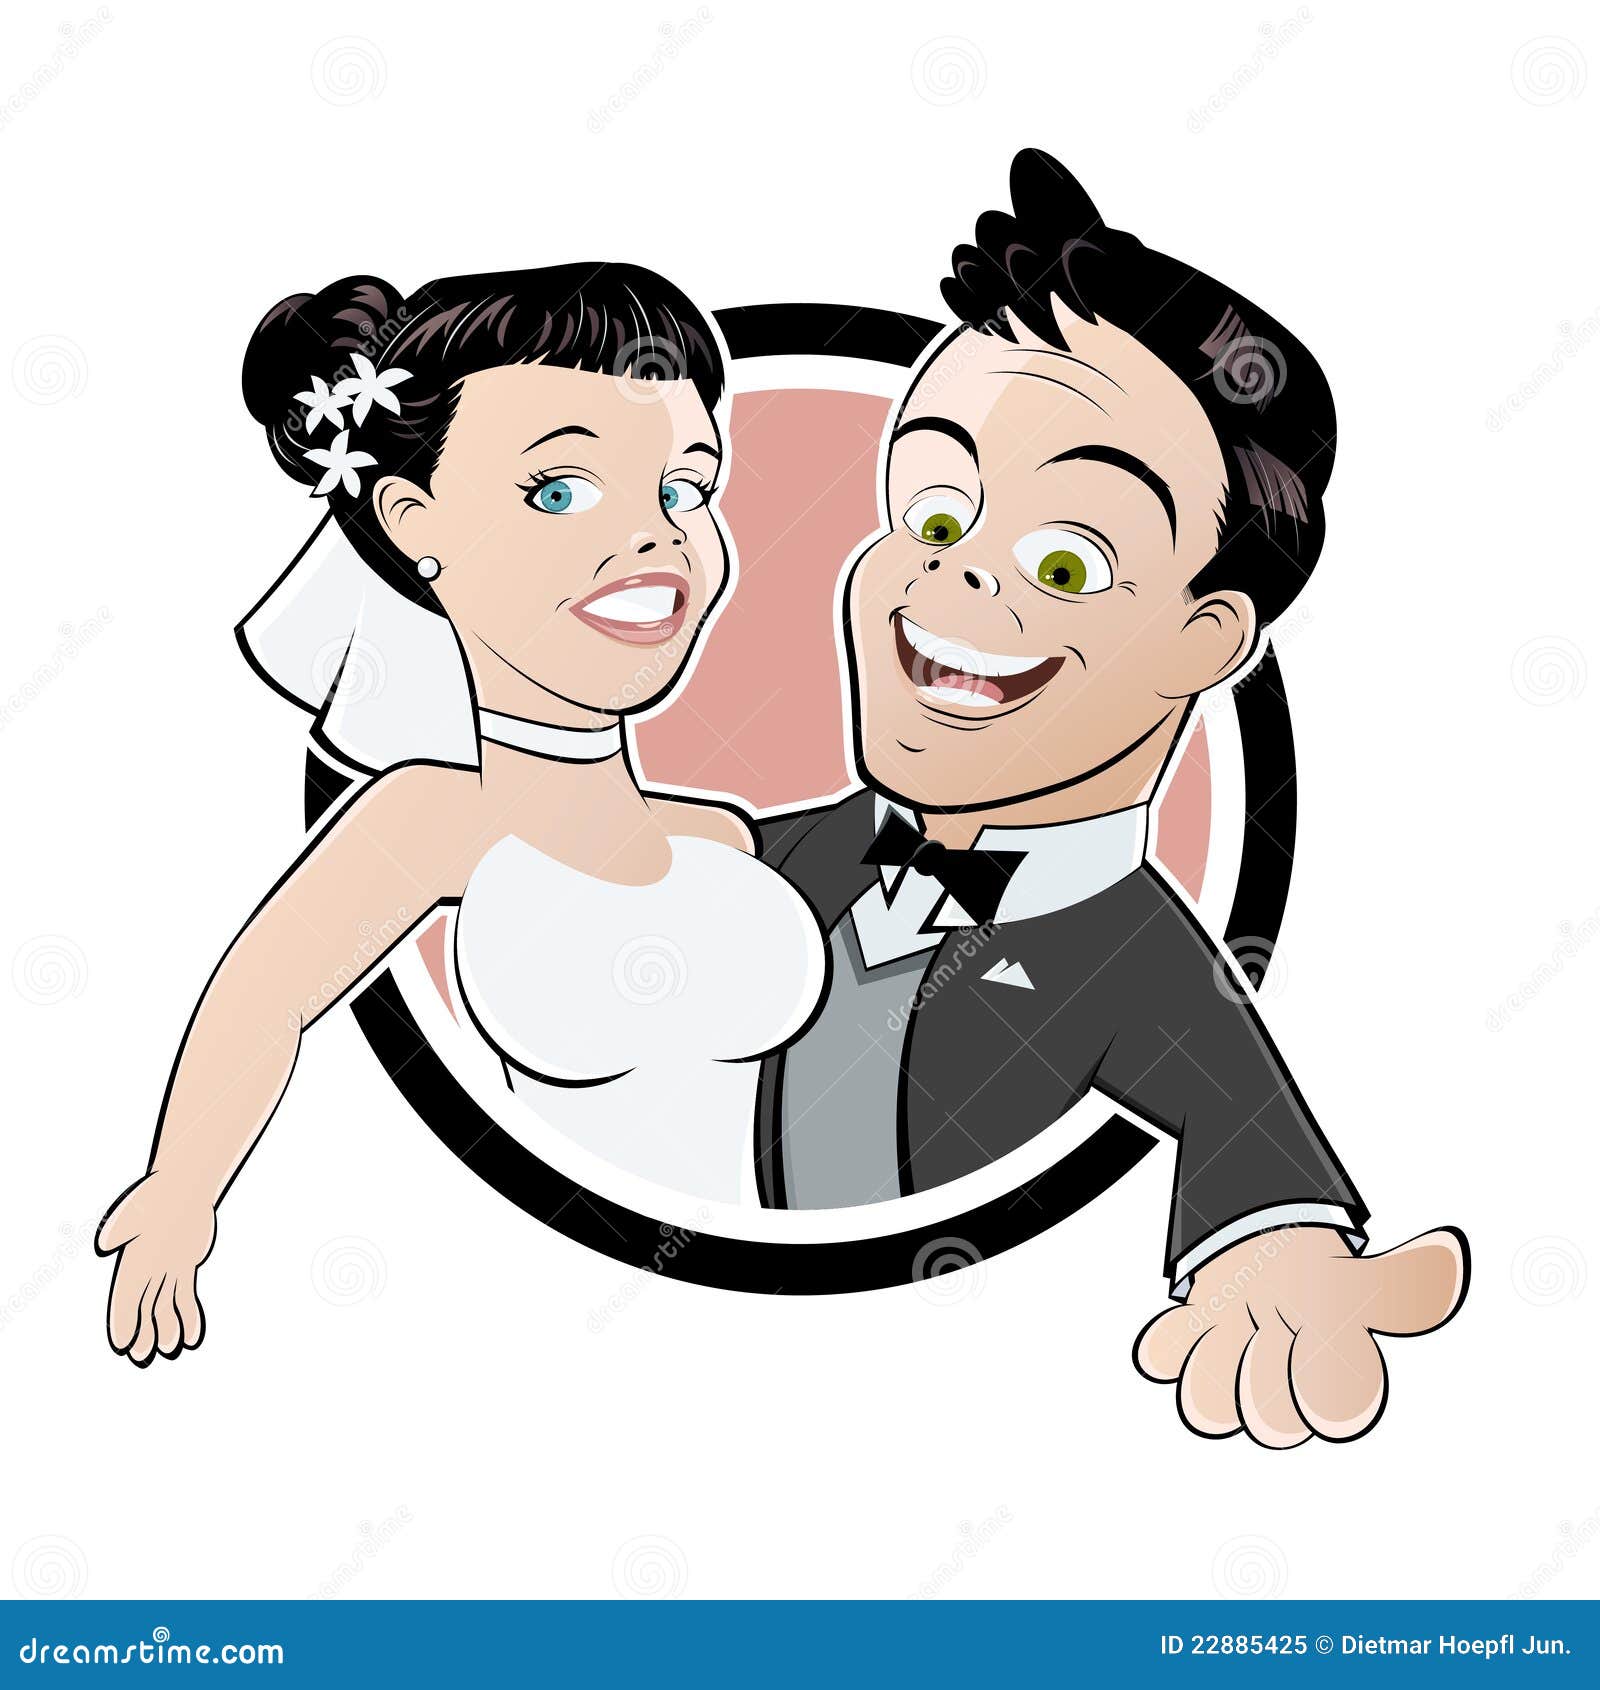 Bride and groom cartoon stock vector. Illustration of wedding - 22885425